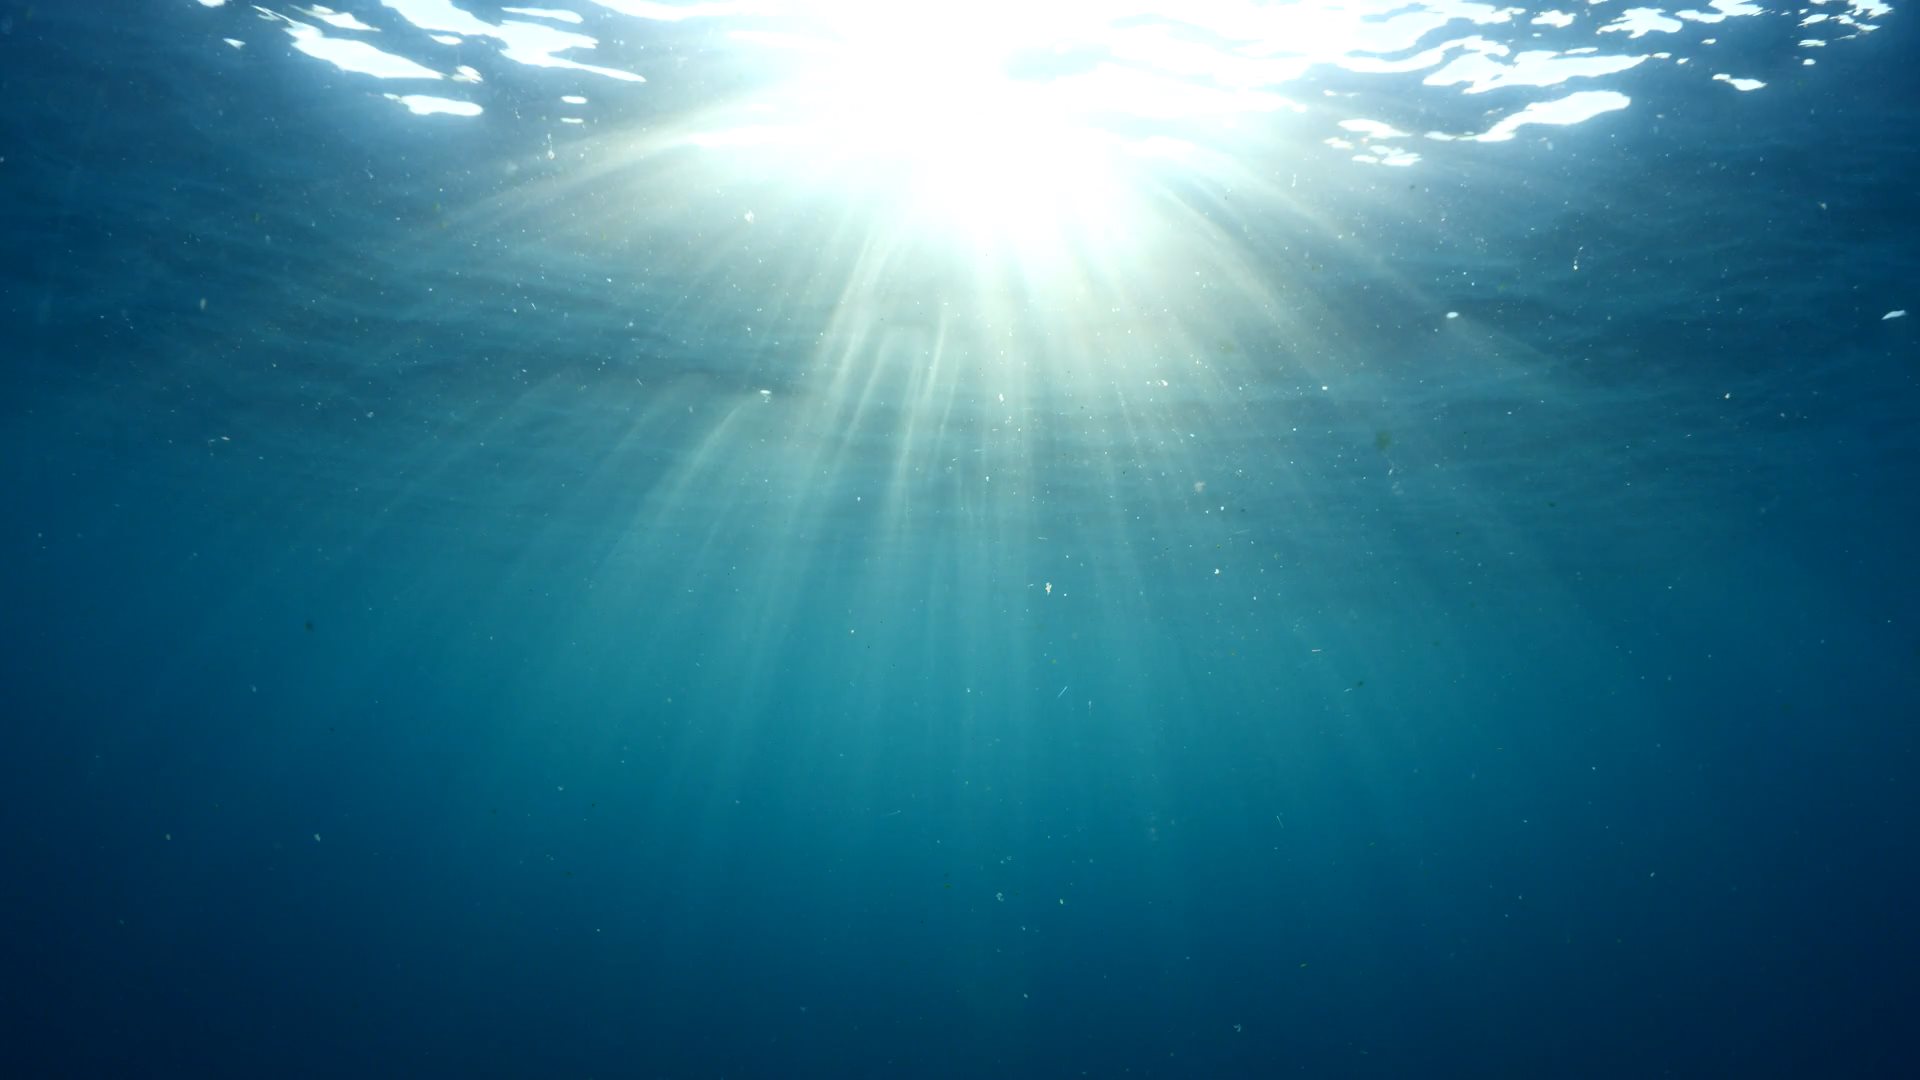 Video of light shining through water filmed from below